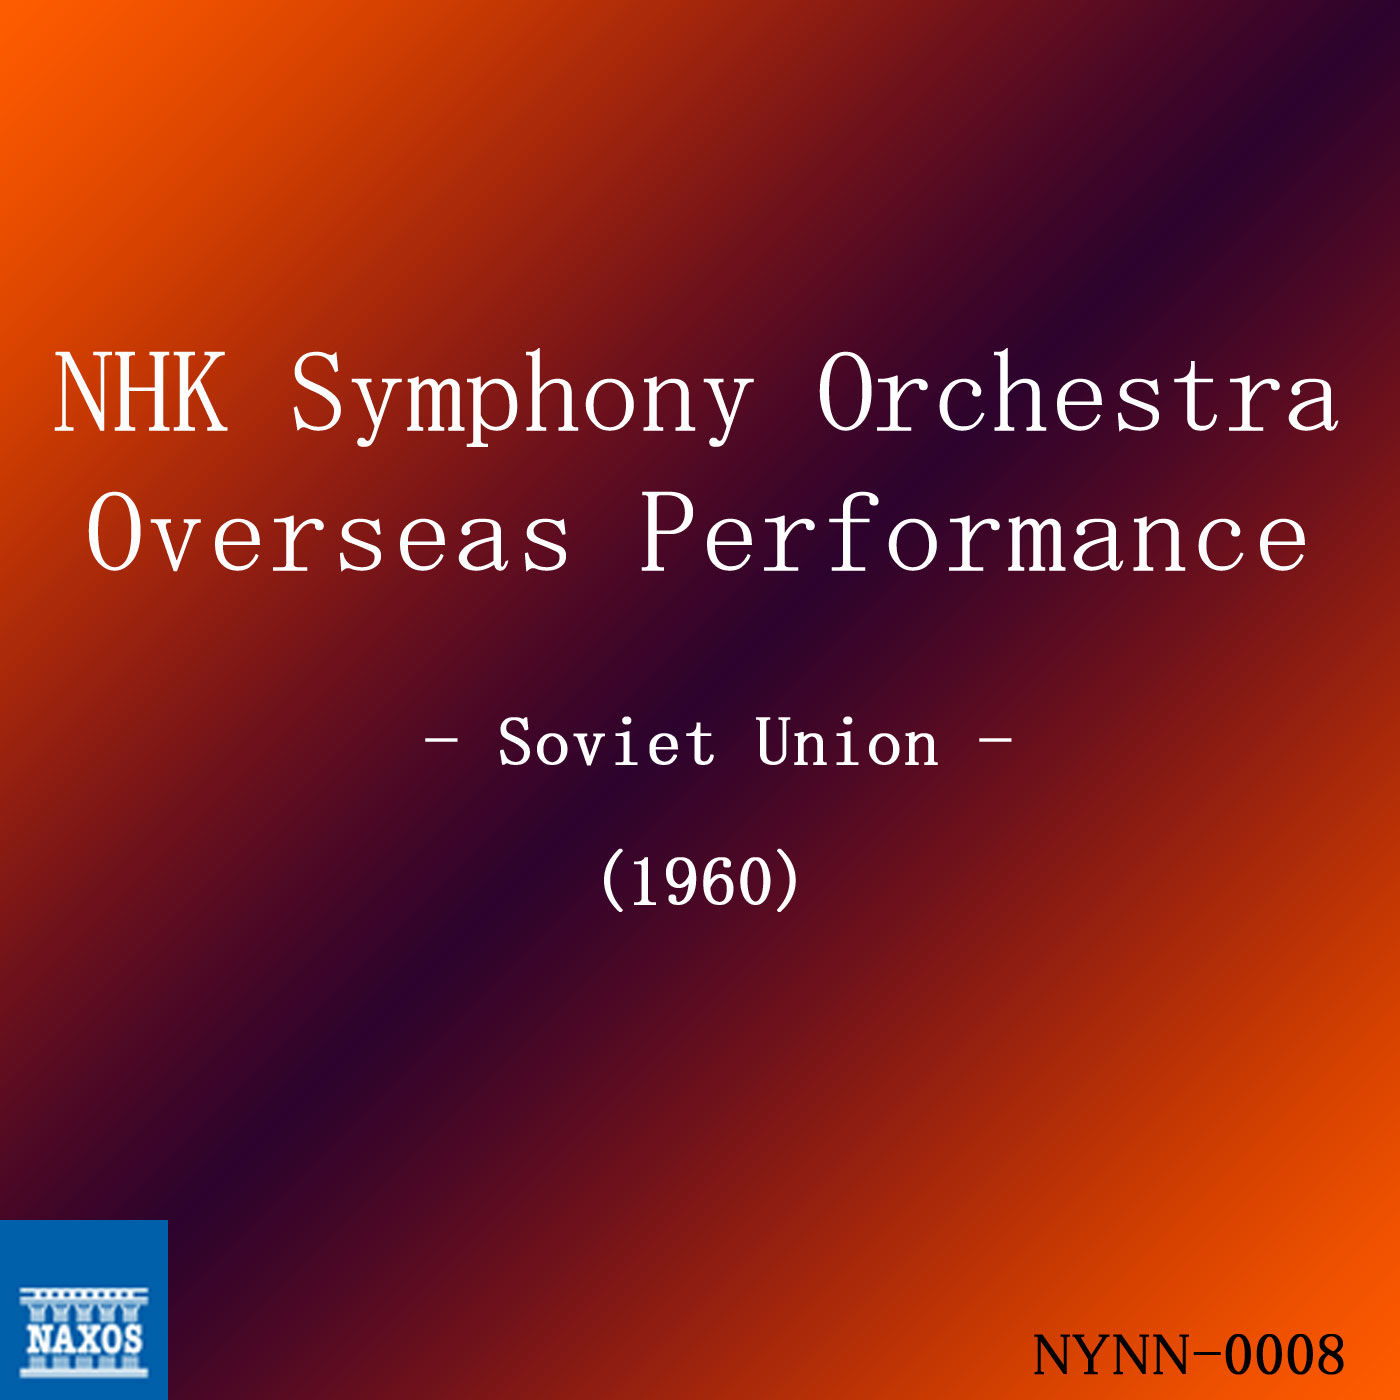 NHK Symphony Orchestra – NHK Symphony Overseas Performance in the Soviet Union